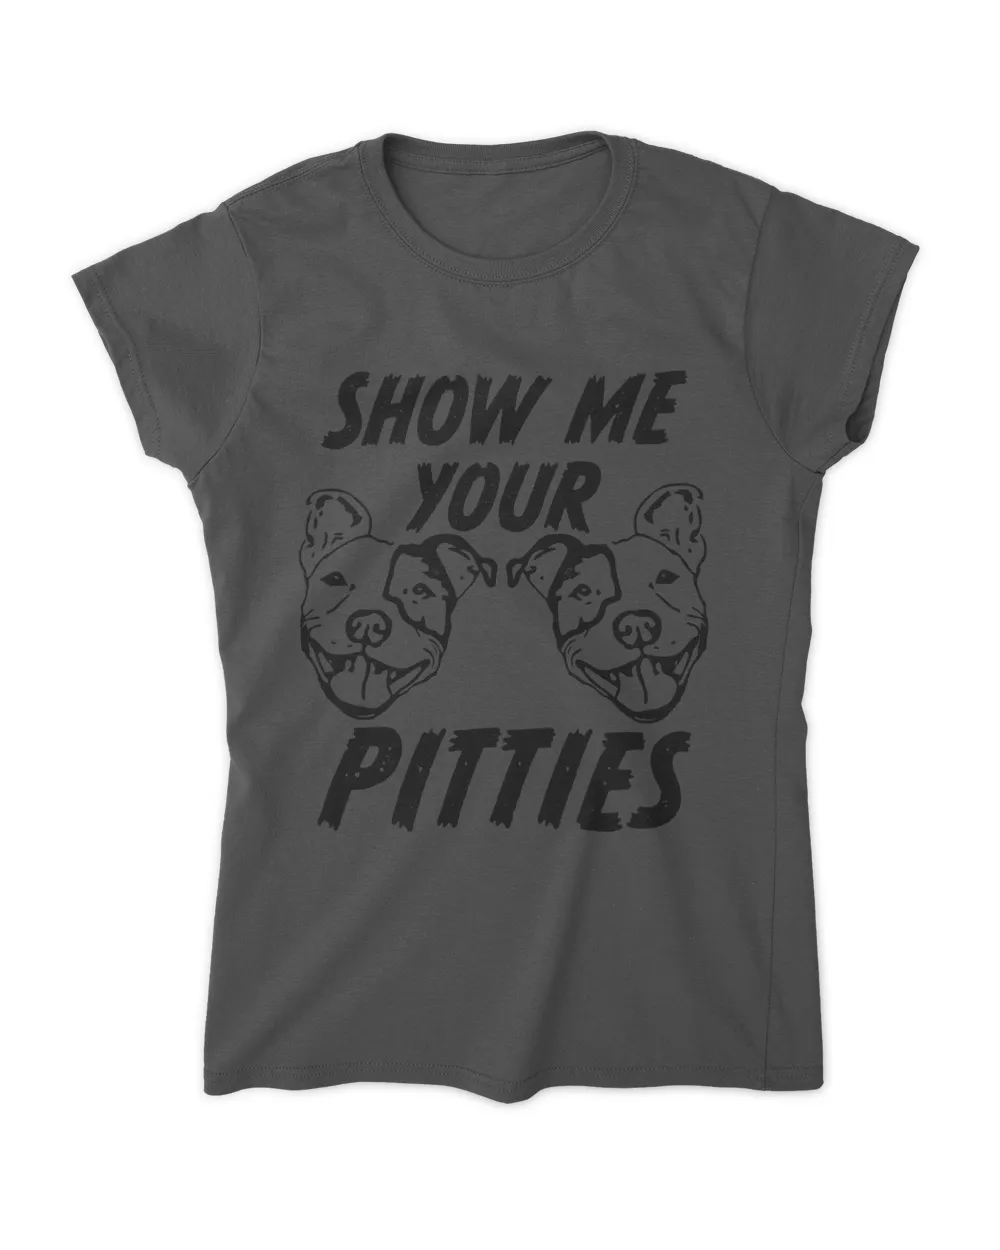 Show me your PItties T-shirt Funny Pitbull Saying Parody tee